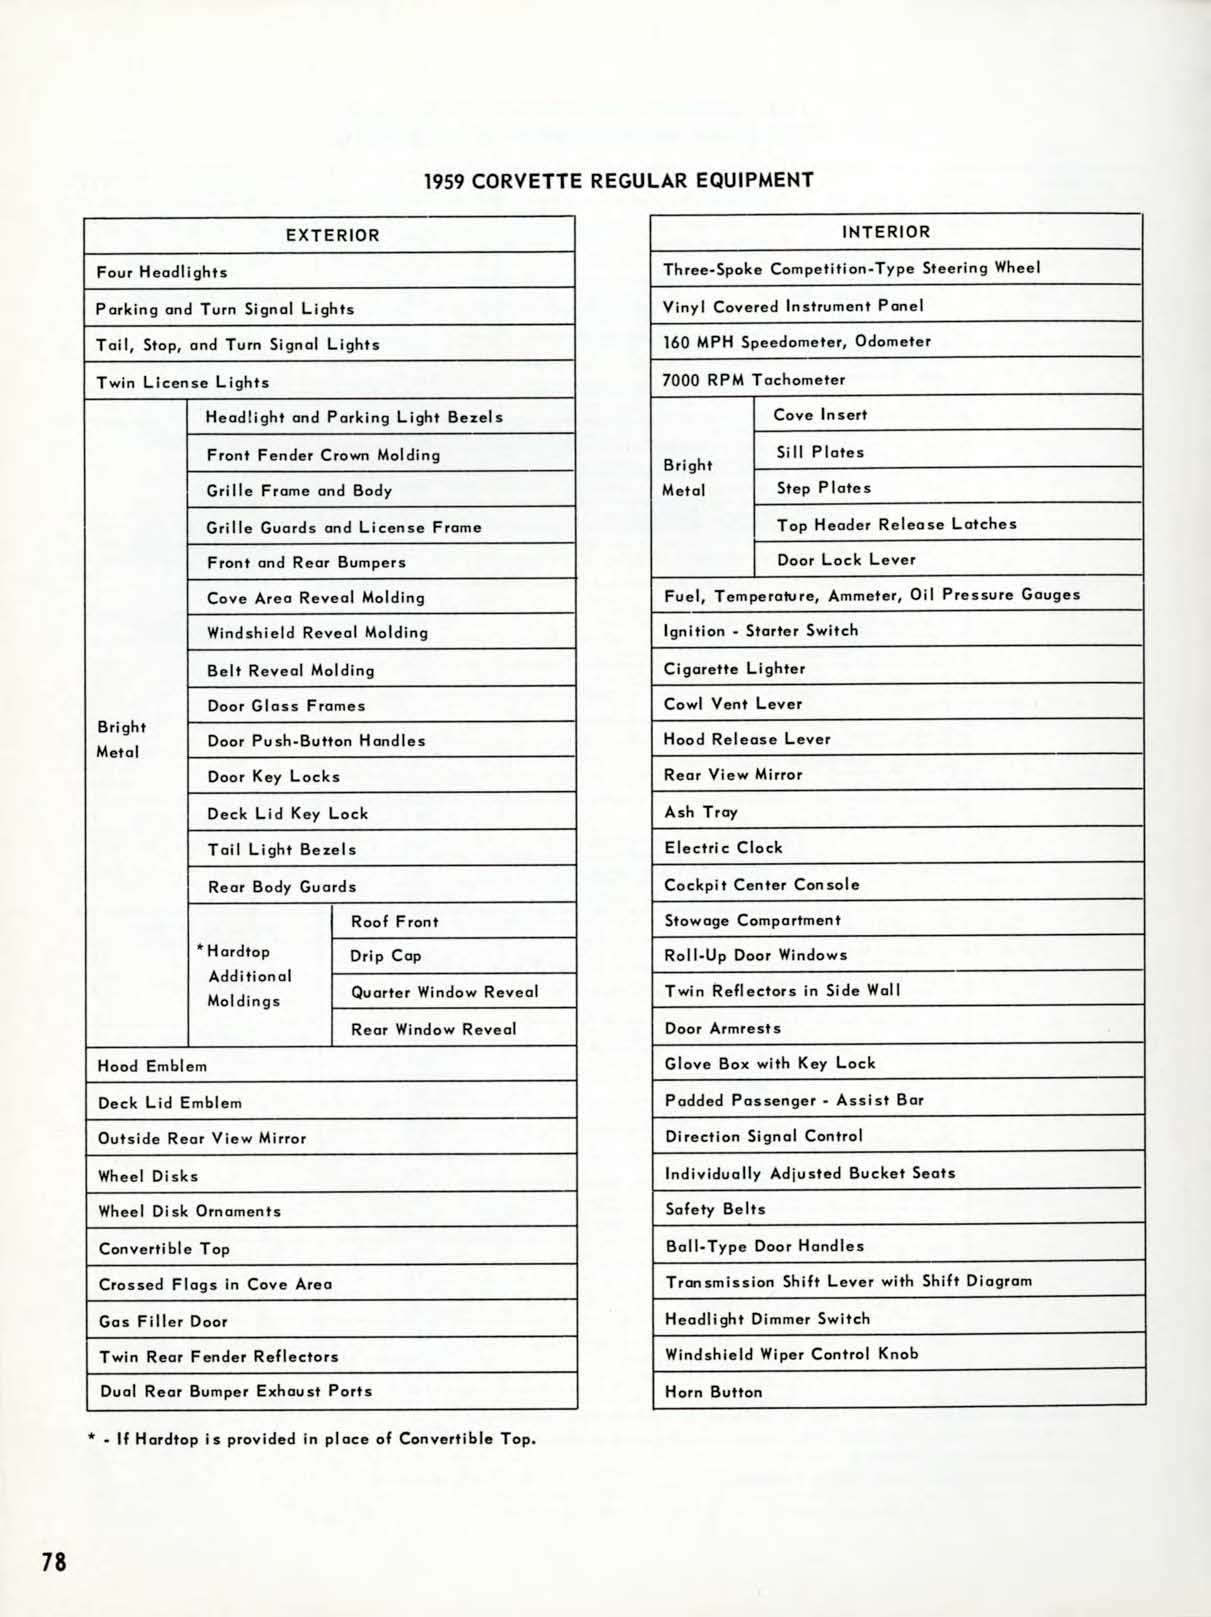 1959_Chevrolet_Engineering_Features-78